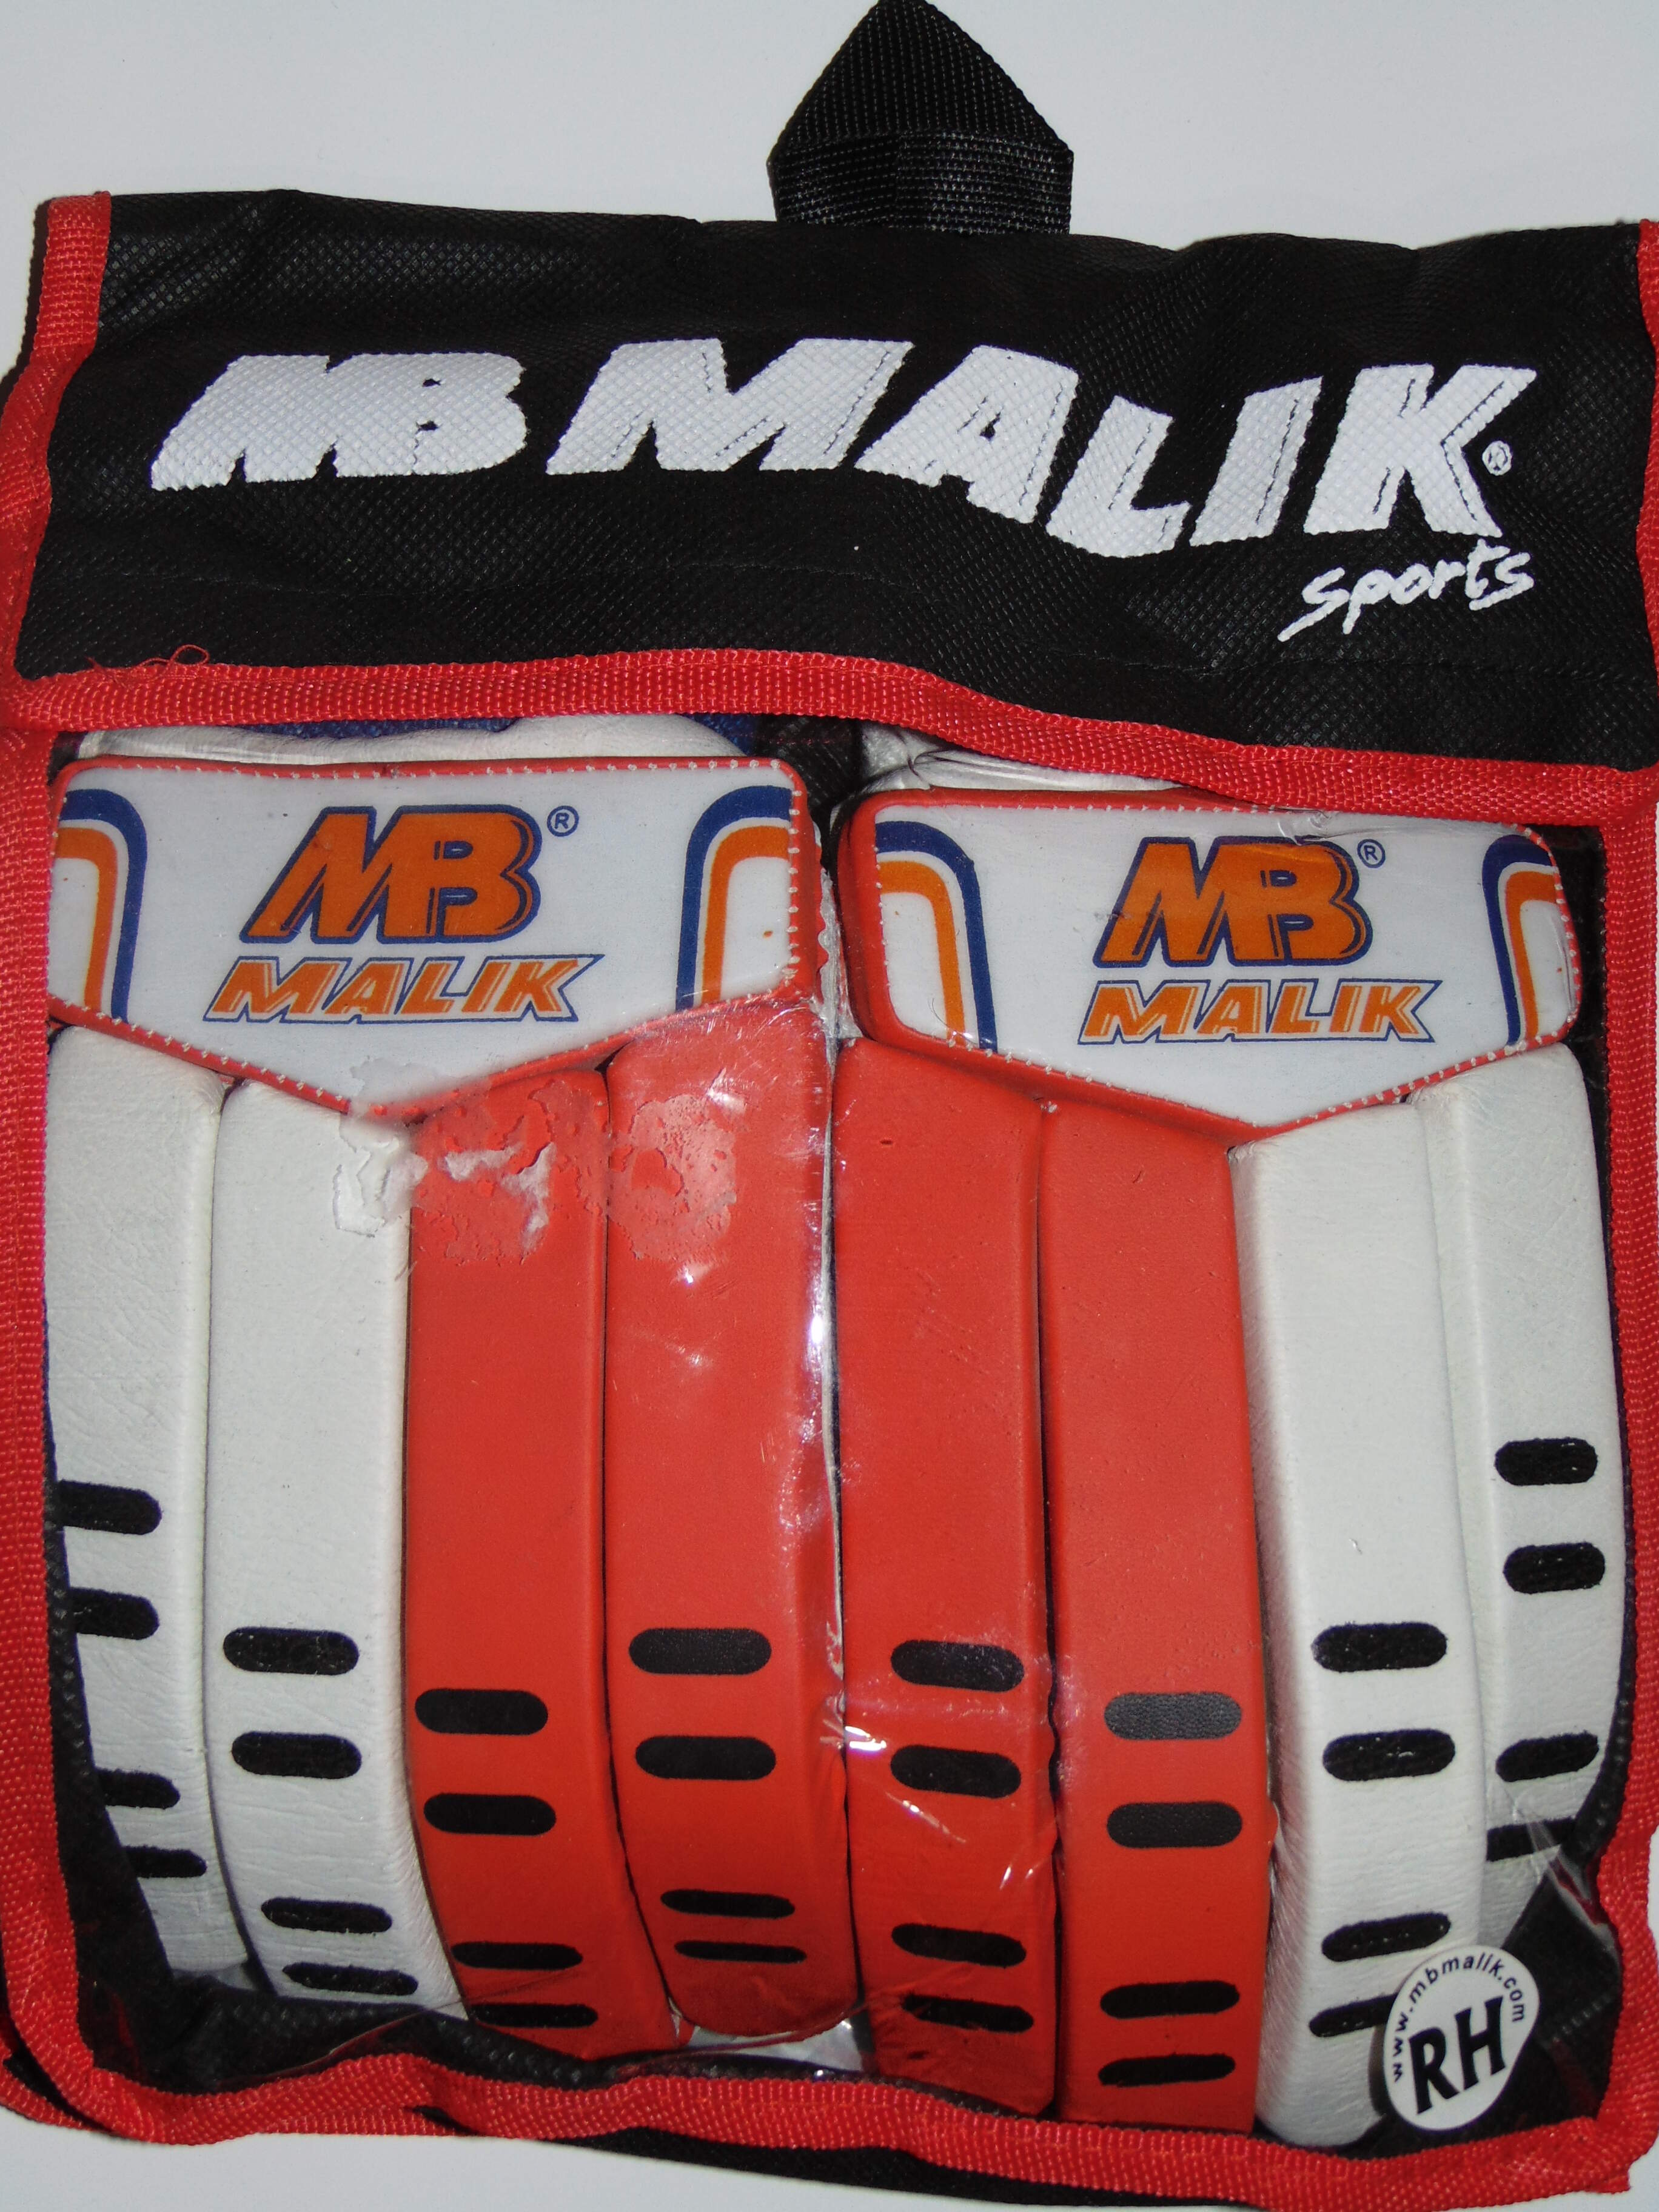 MB Malik Supreme Mens Cricket Batting Gloves Size R/Hand was £ 19.00